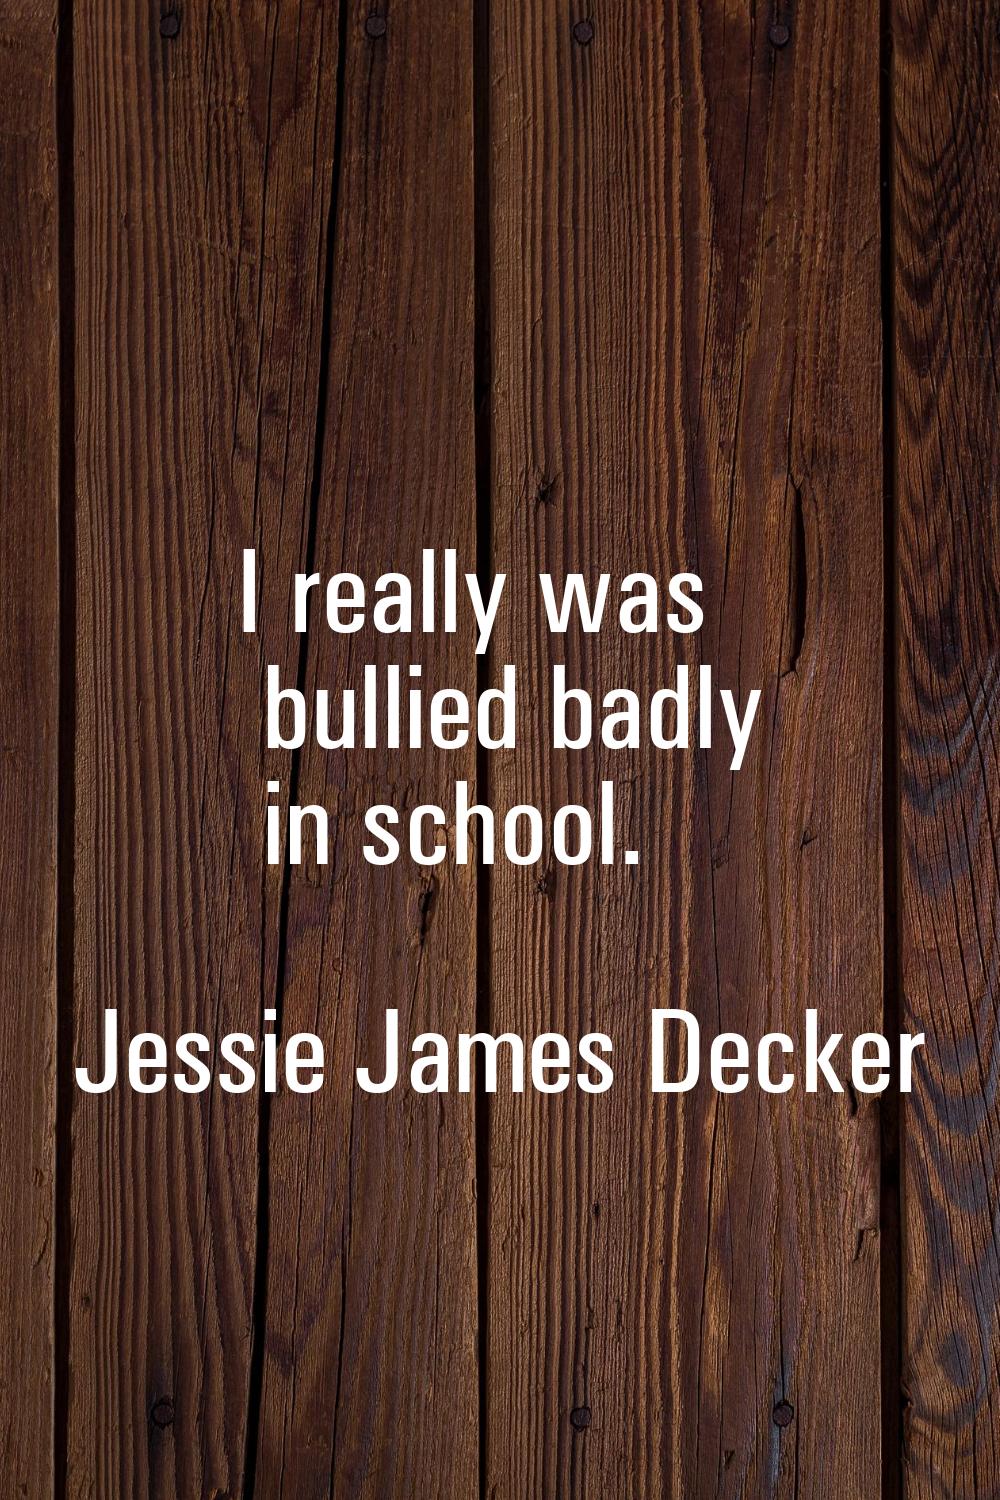 I really was bullied badly in school.